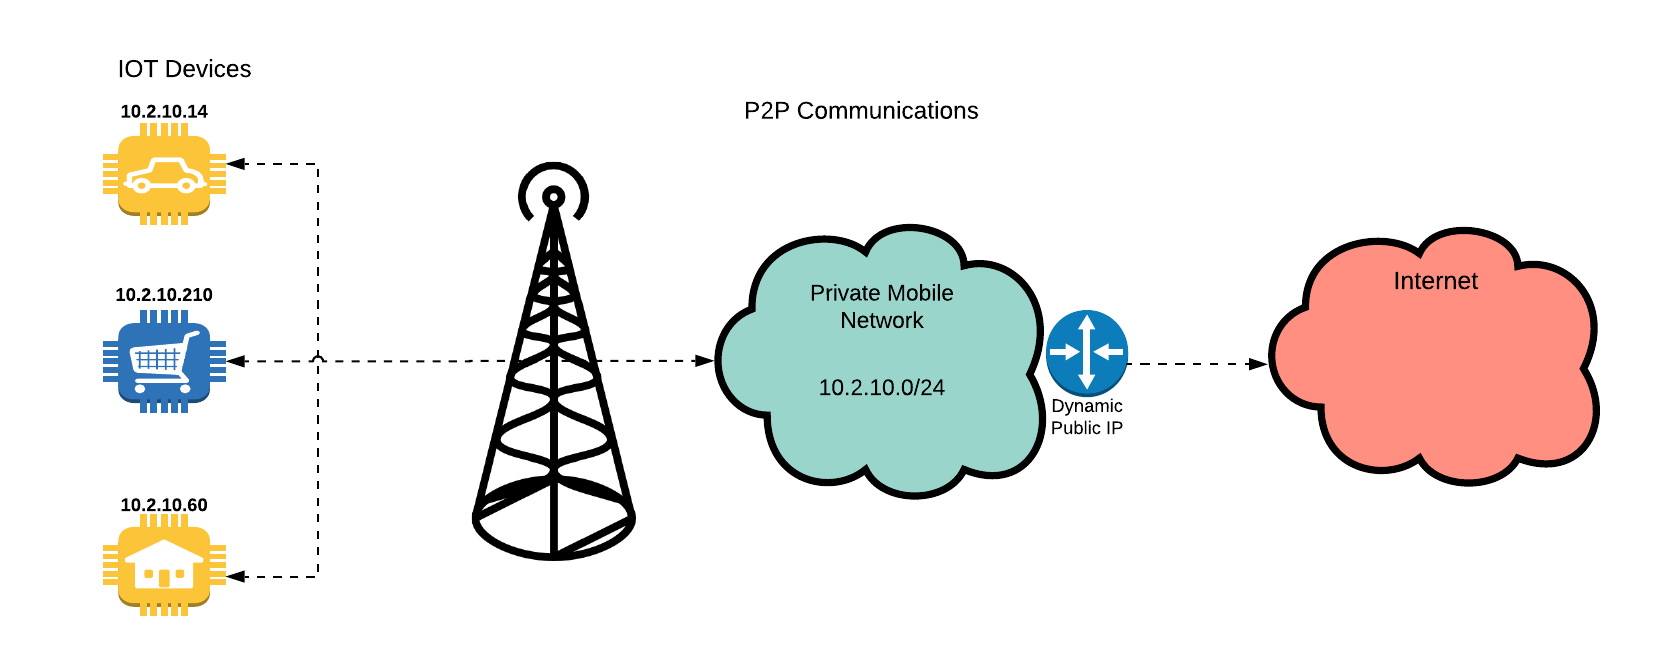 Peer to Peer (P2P) communications for IoT